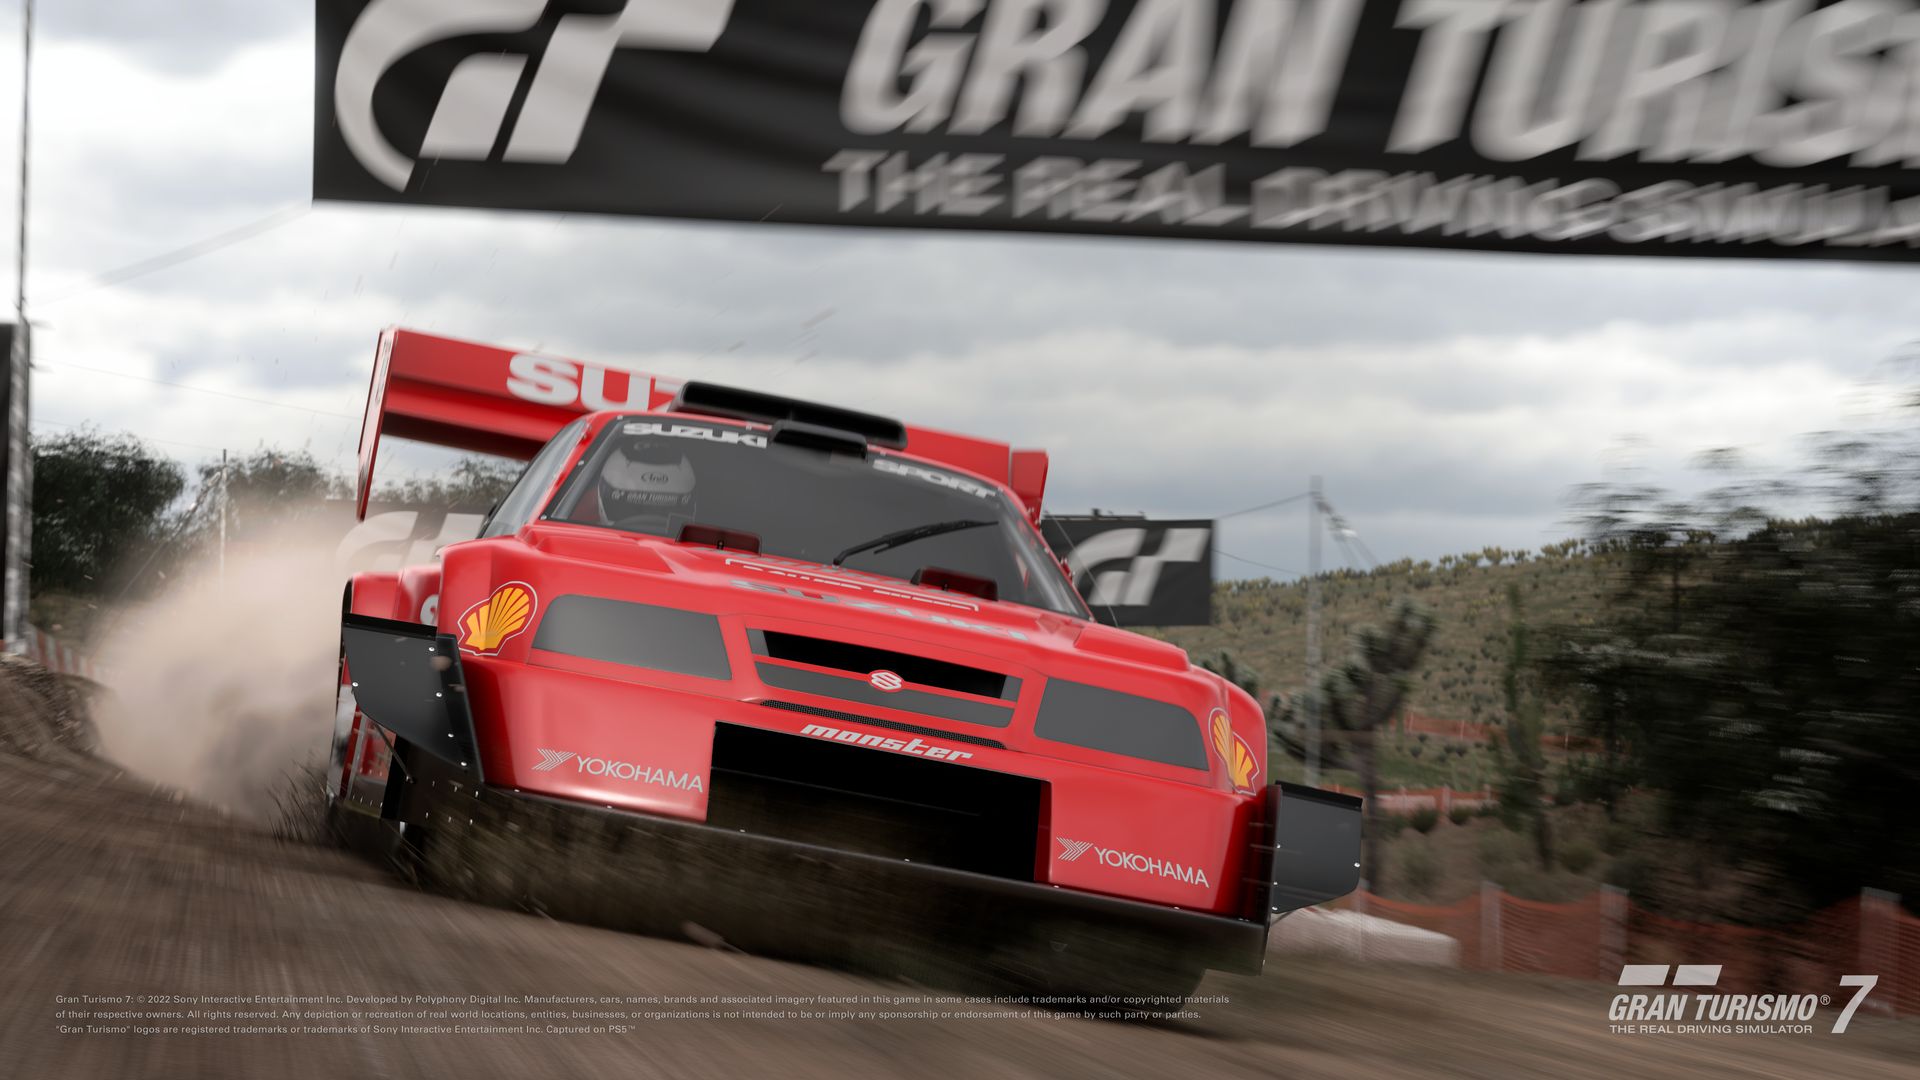 The craziest engine swaps in Gran Turismo 7